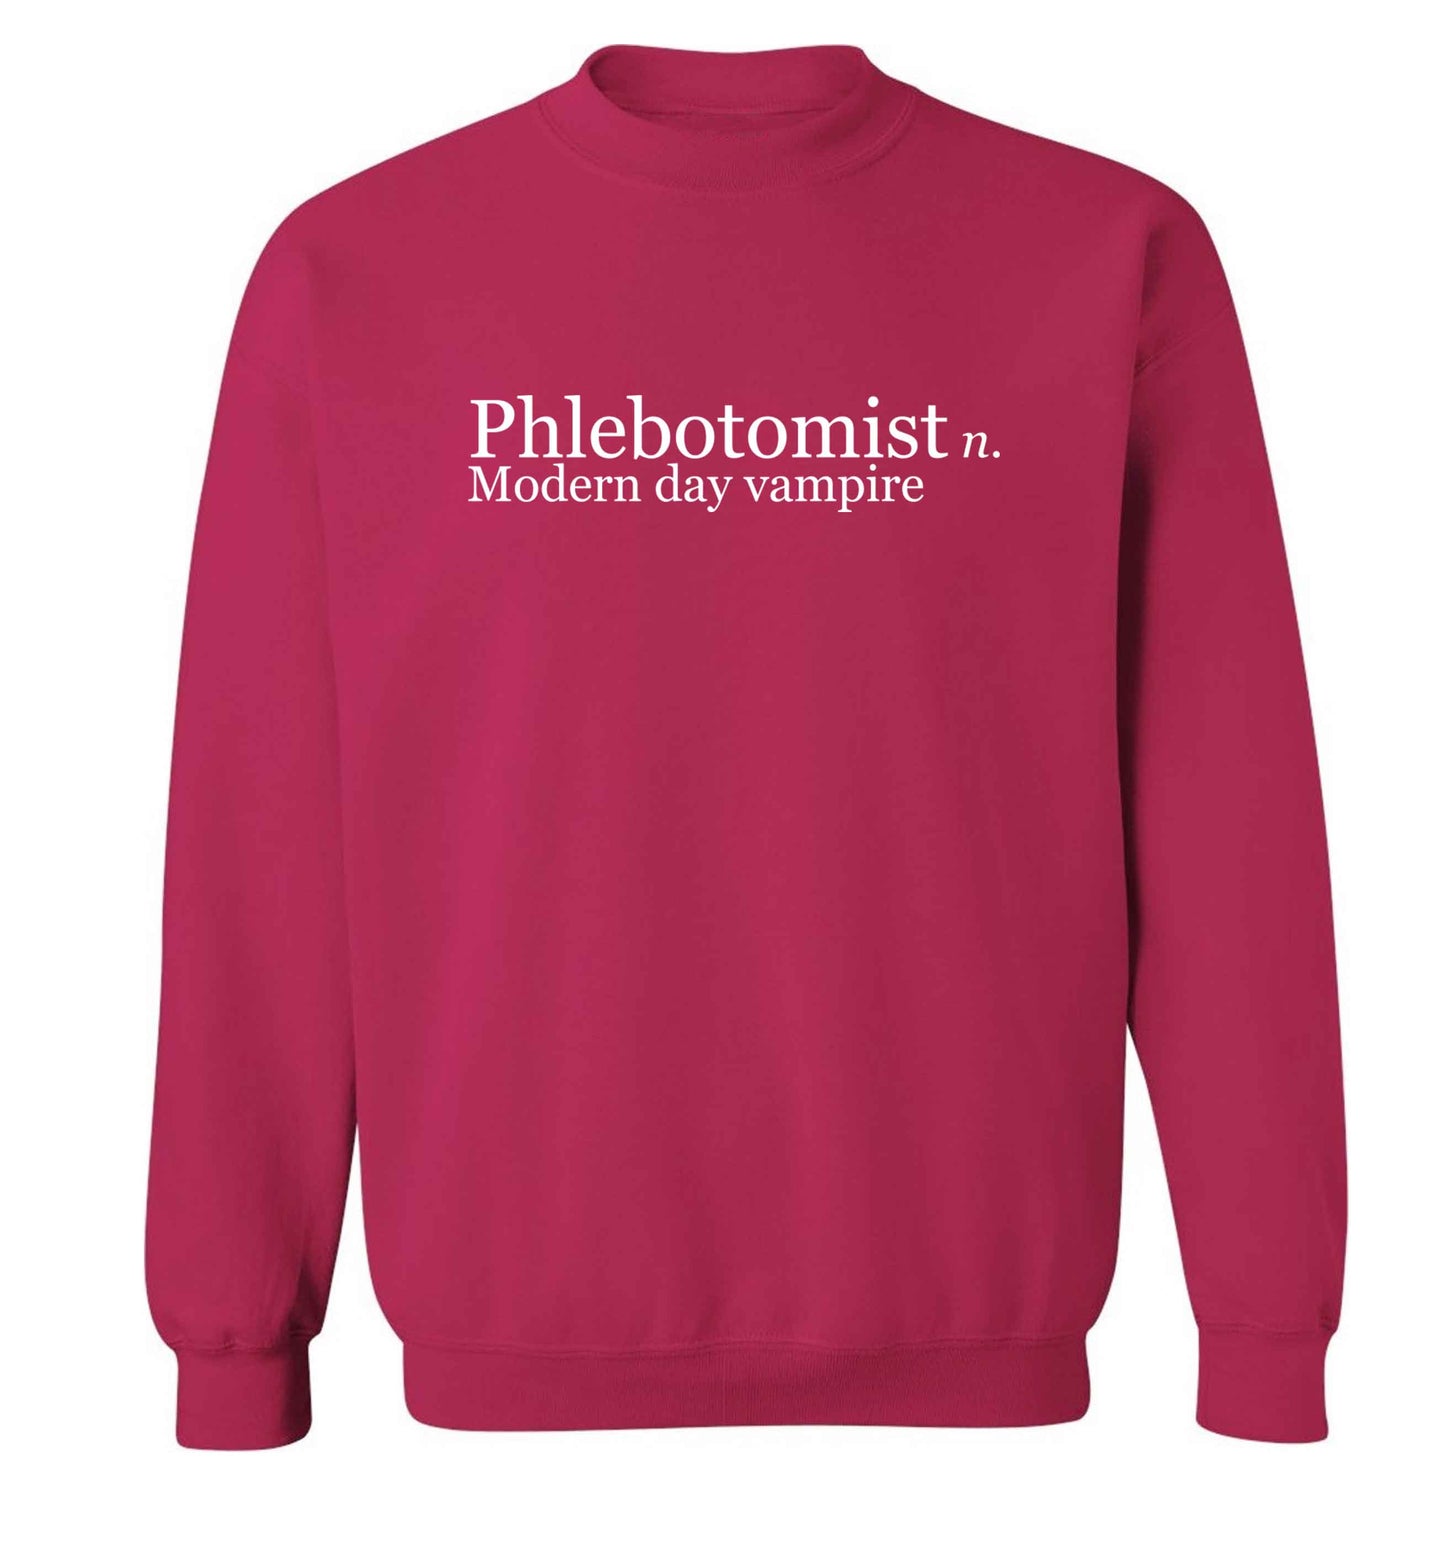 Phlebotomist - Modern day vampire adult's unisex pink sweater 2XL